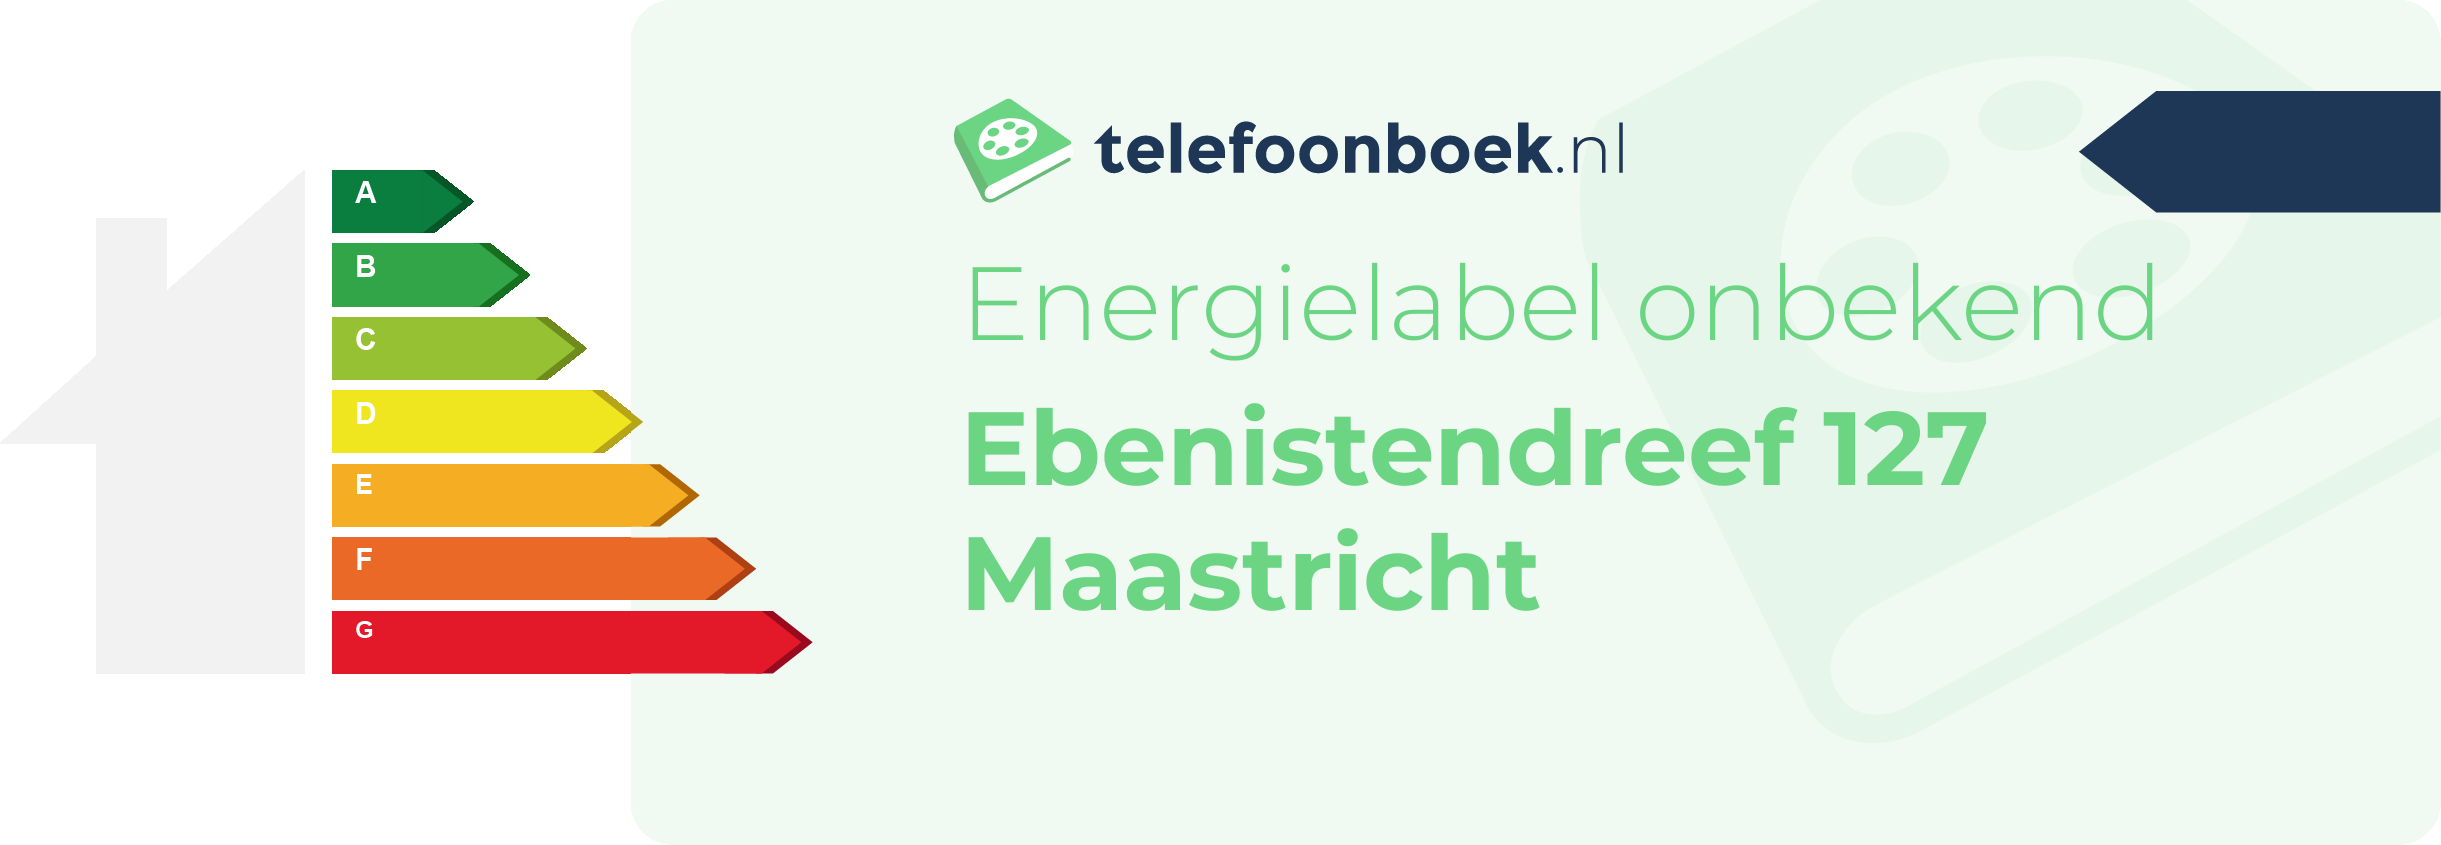 Energielabel Ebenistendreef 127 Maastricht